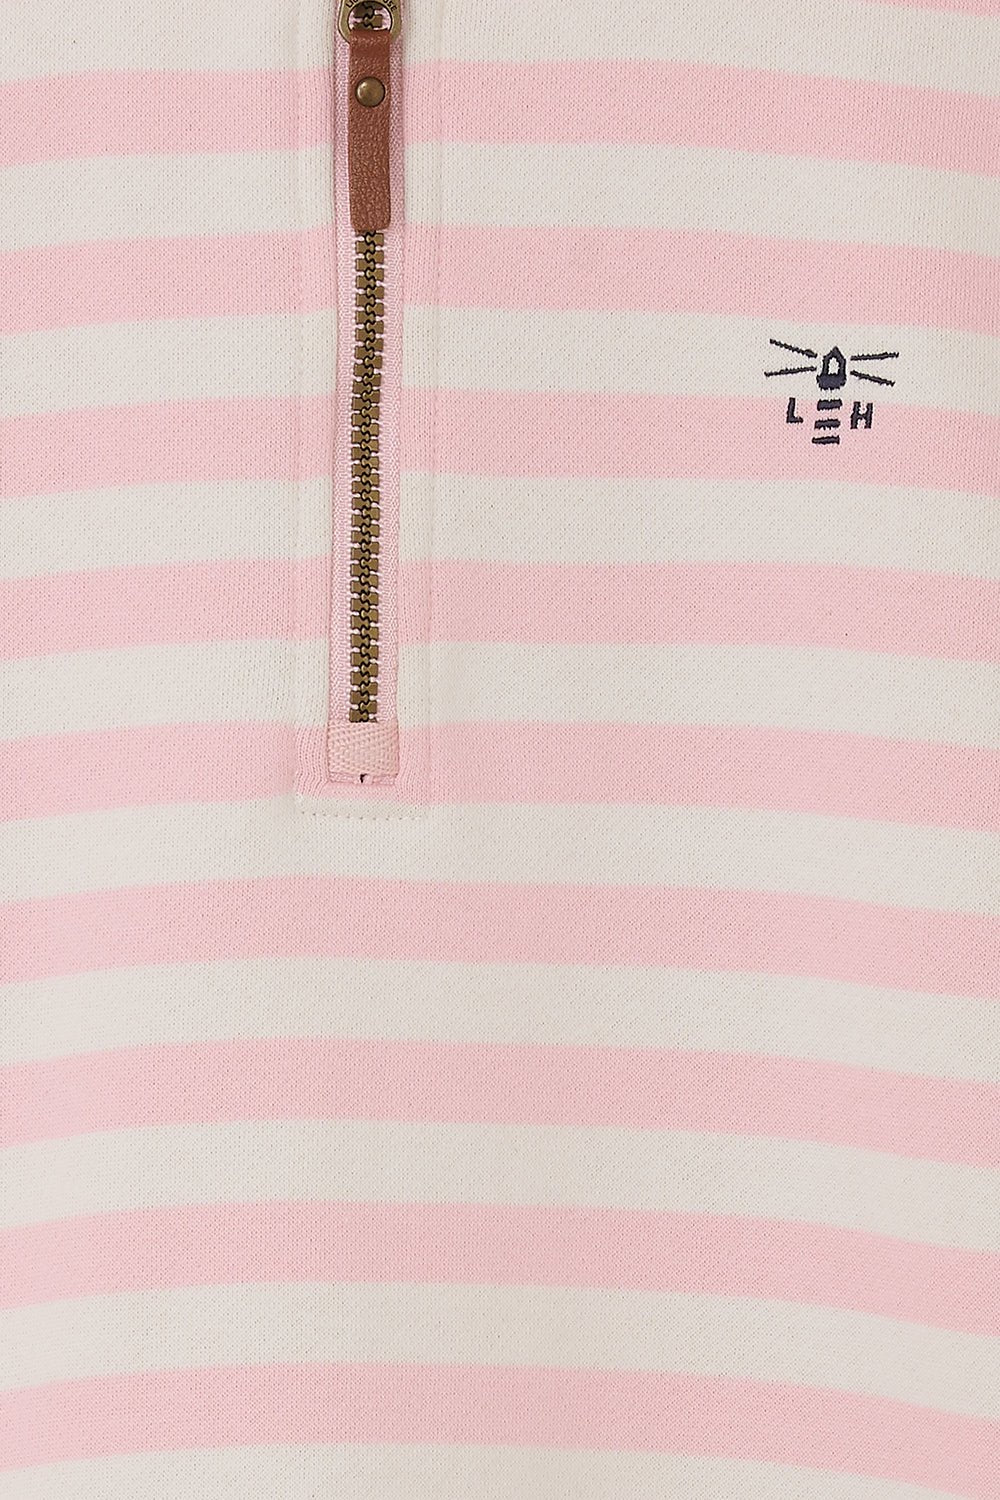 Shore Sweatshirt - Soft Pink Stripe-Lighthouse